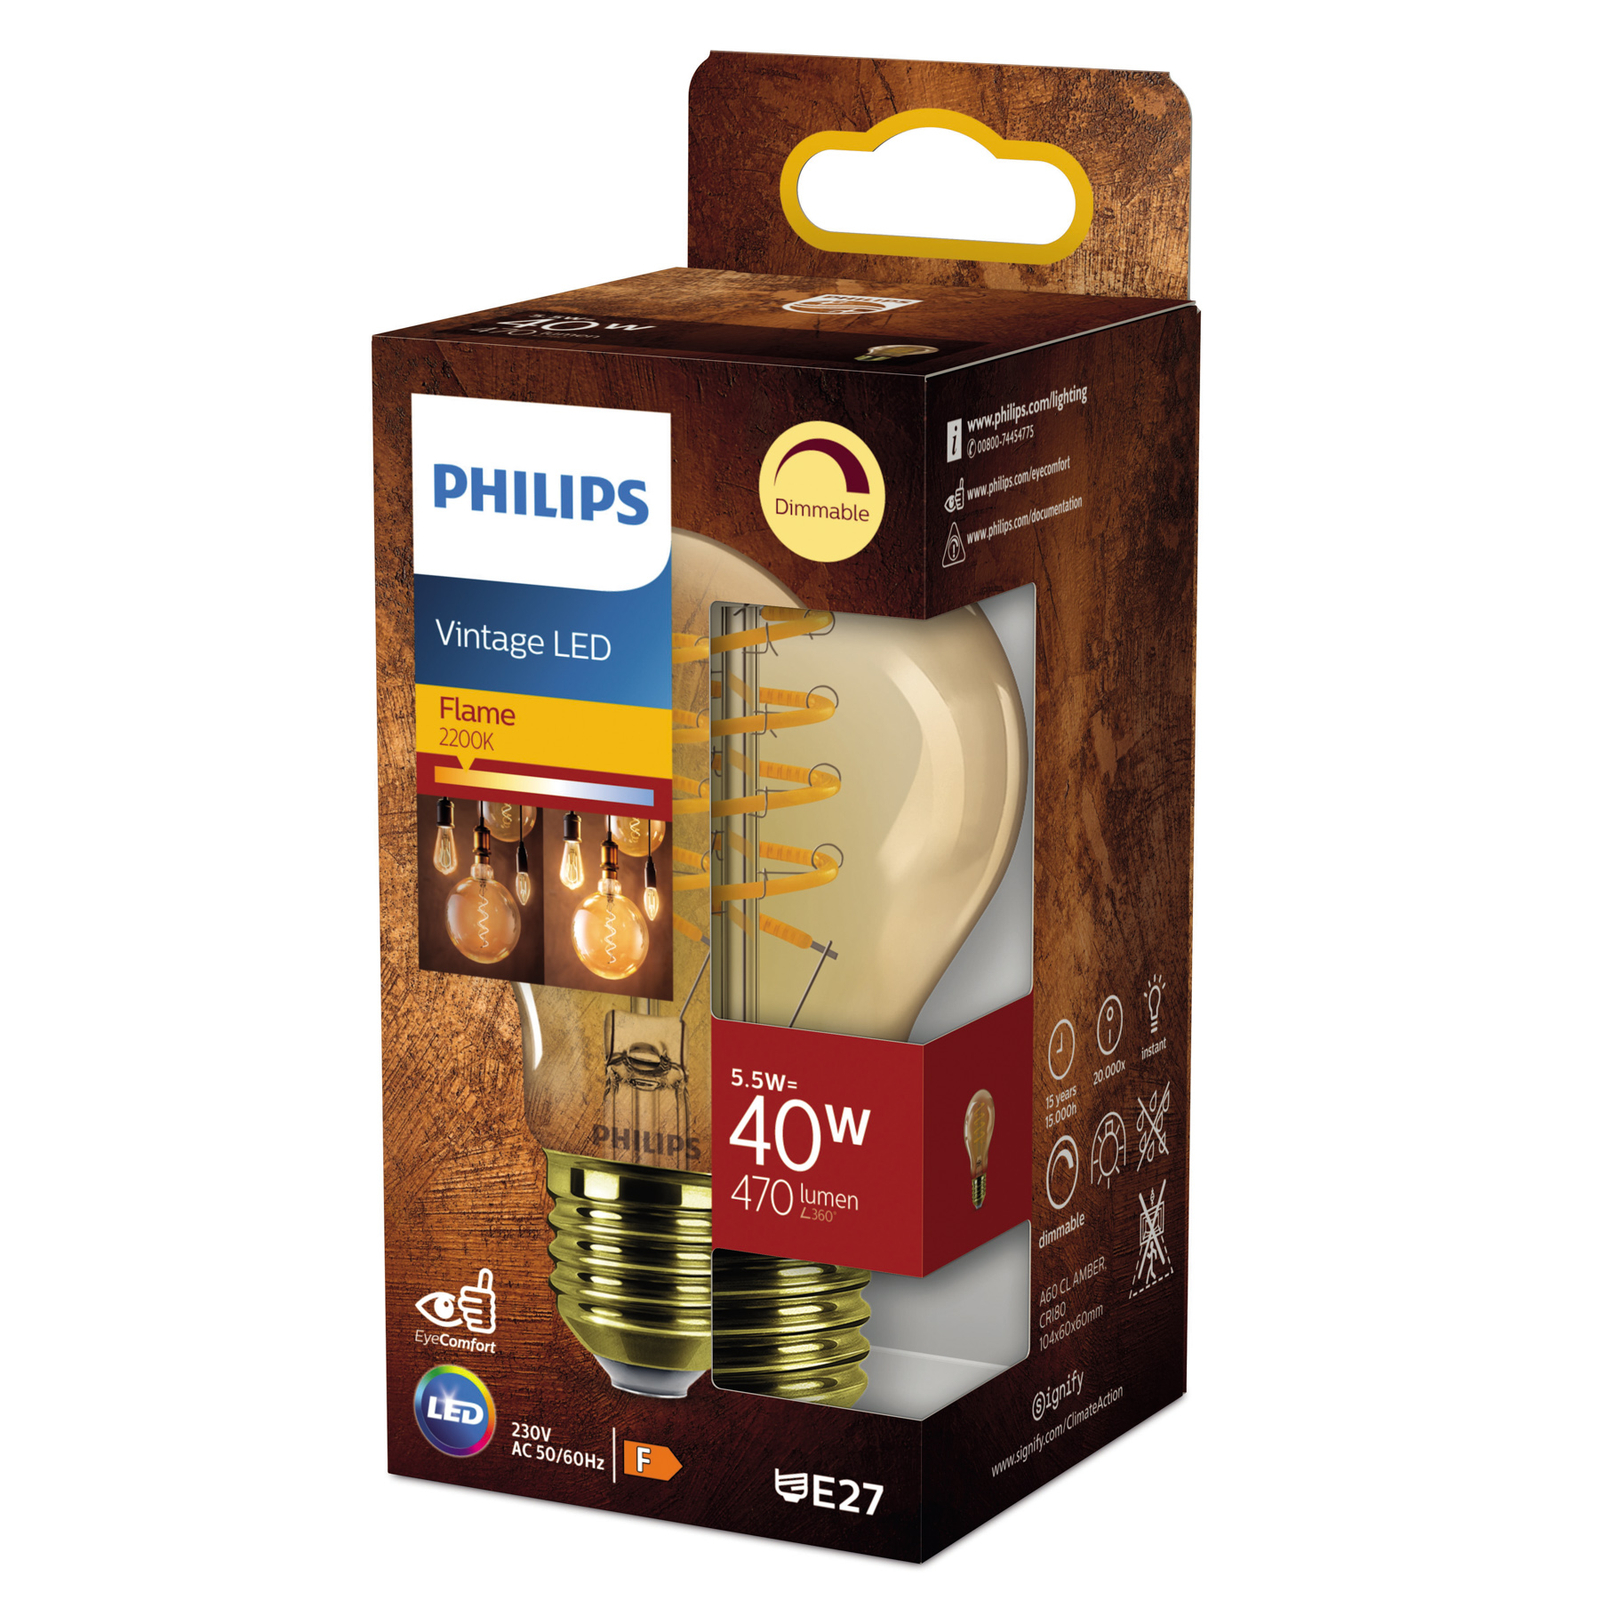 Ampoule LED GX53 5.5 W EyeComfort - Philips